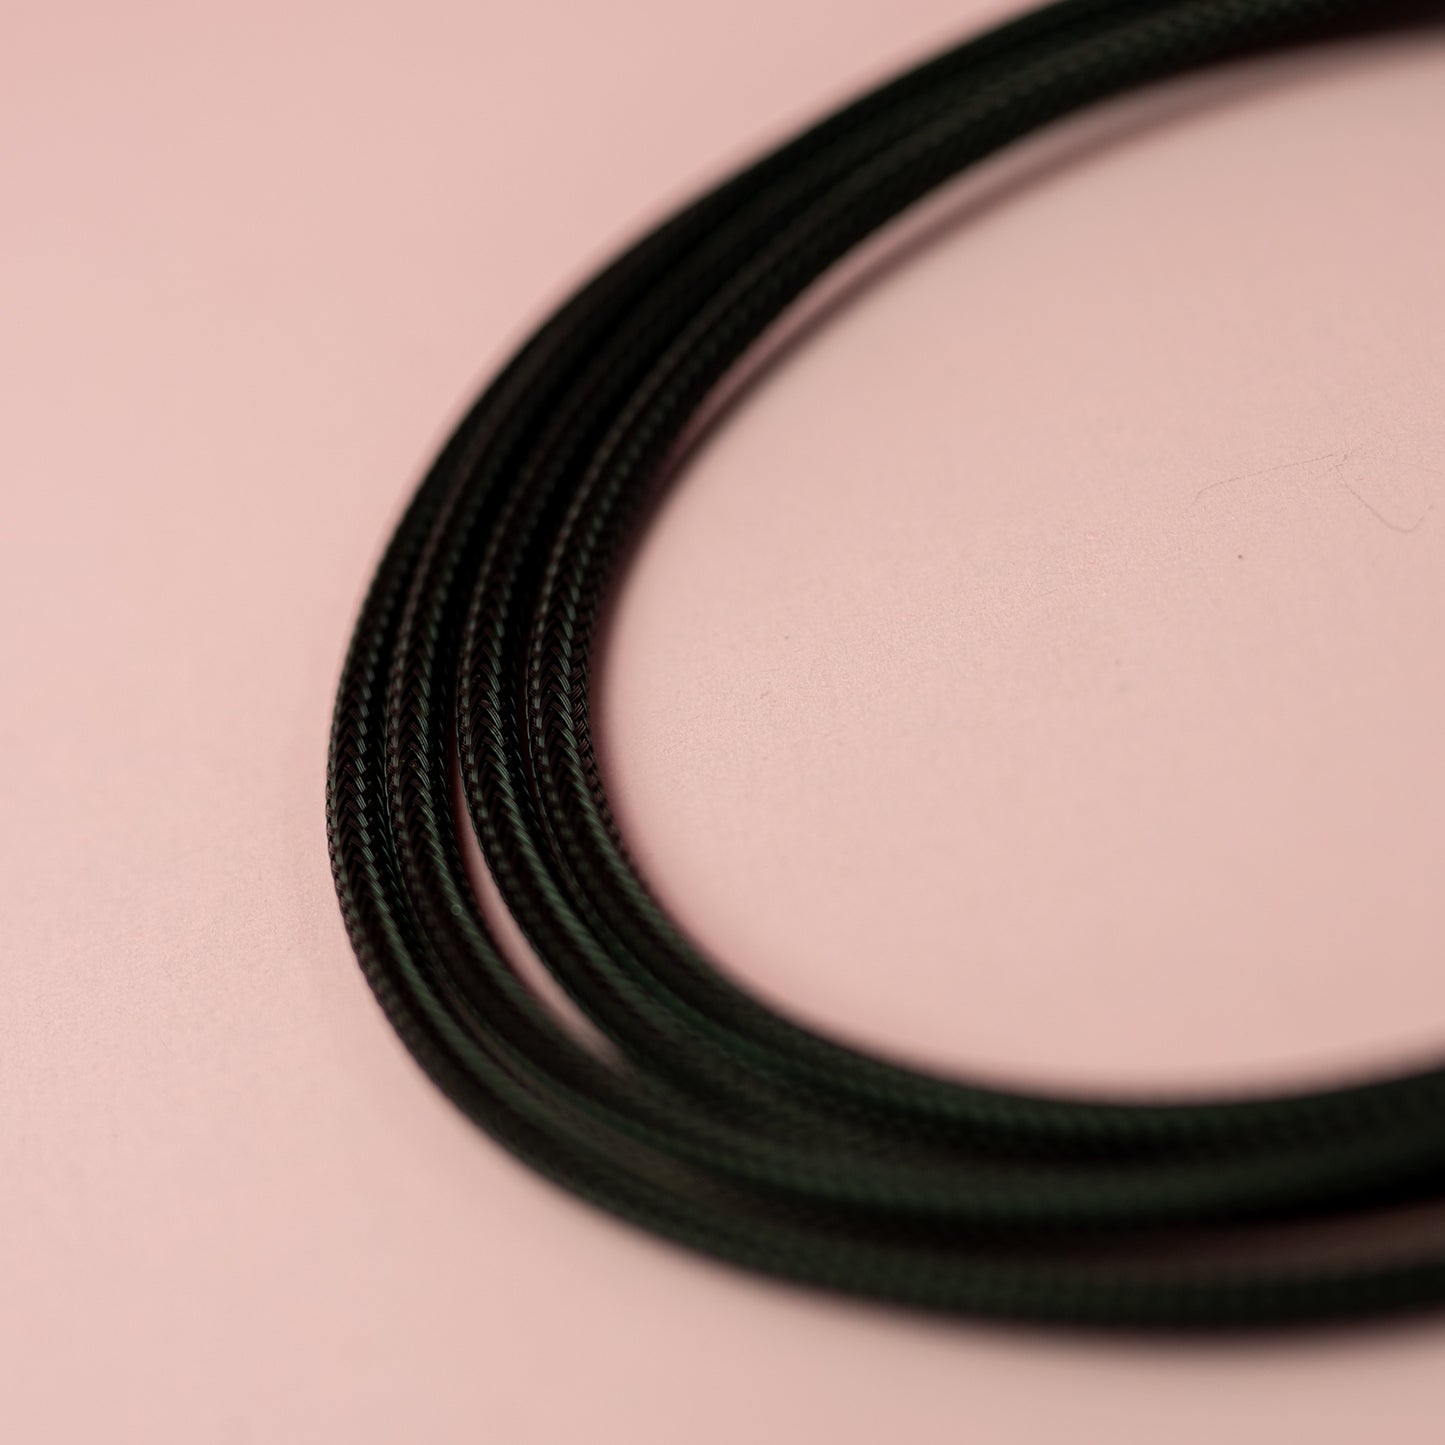 Blackest Black USB C Cable